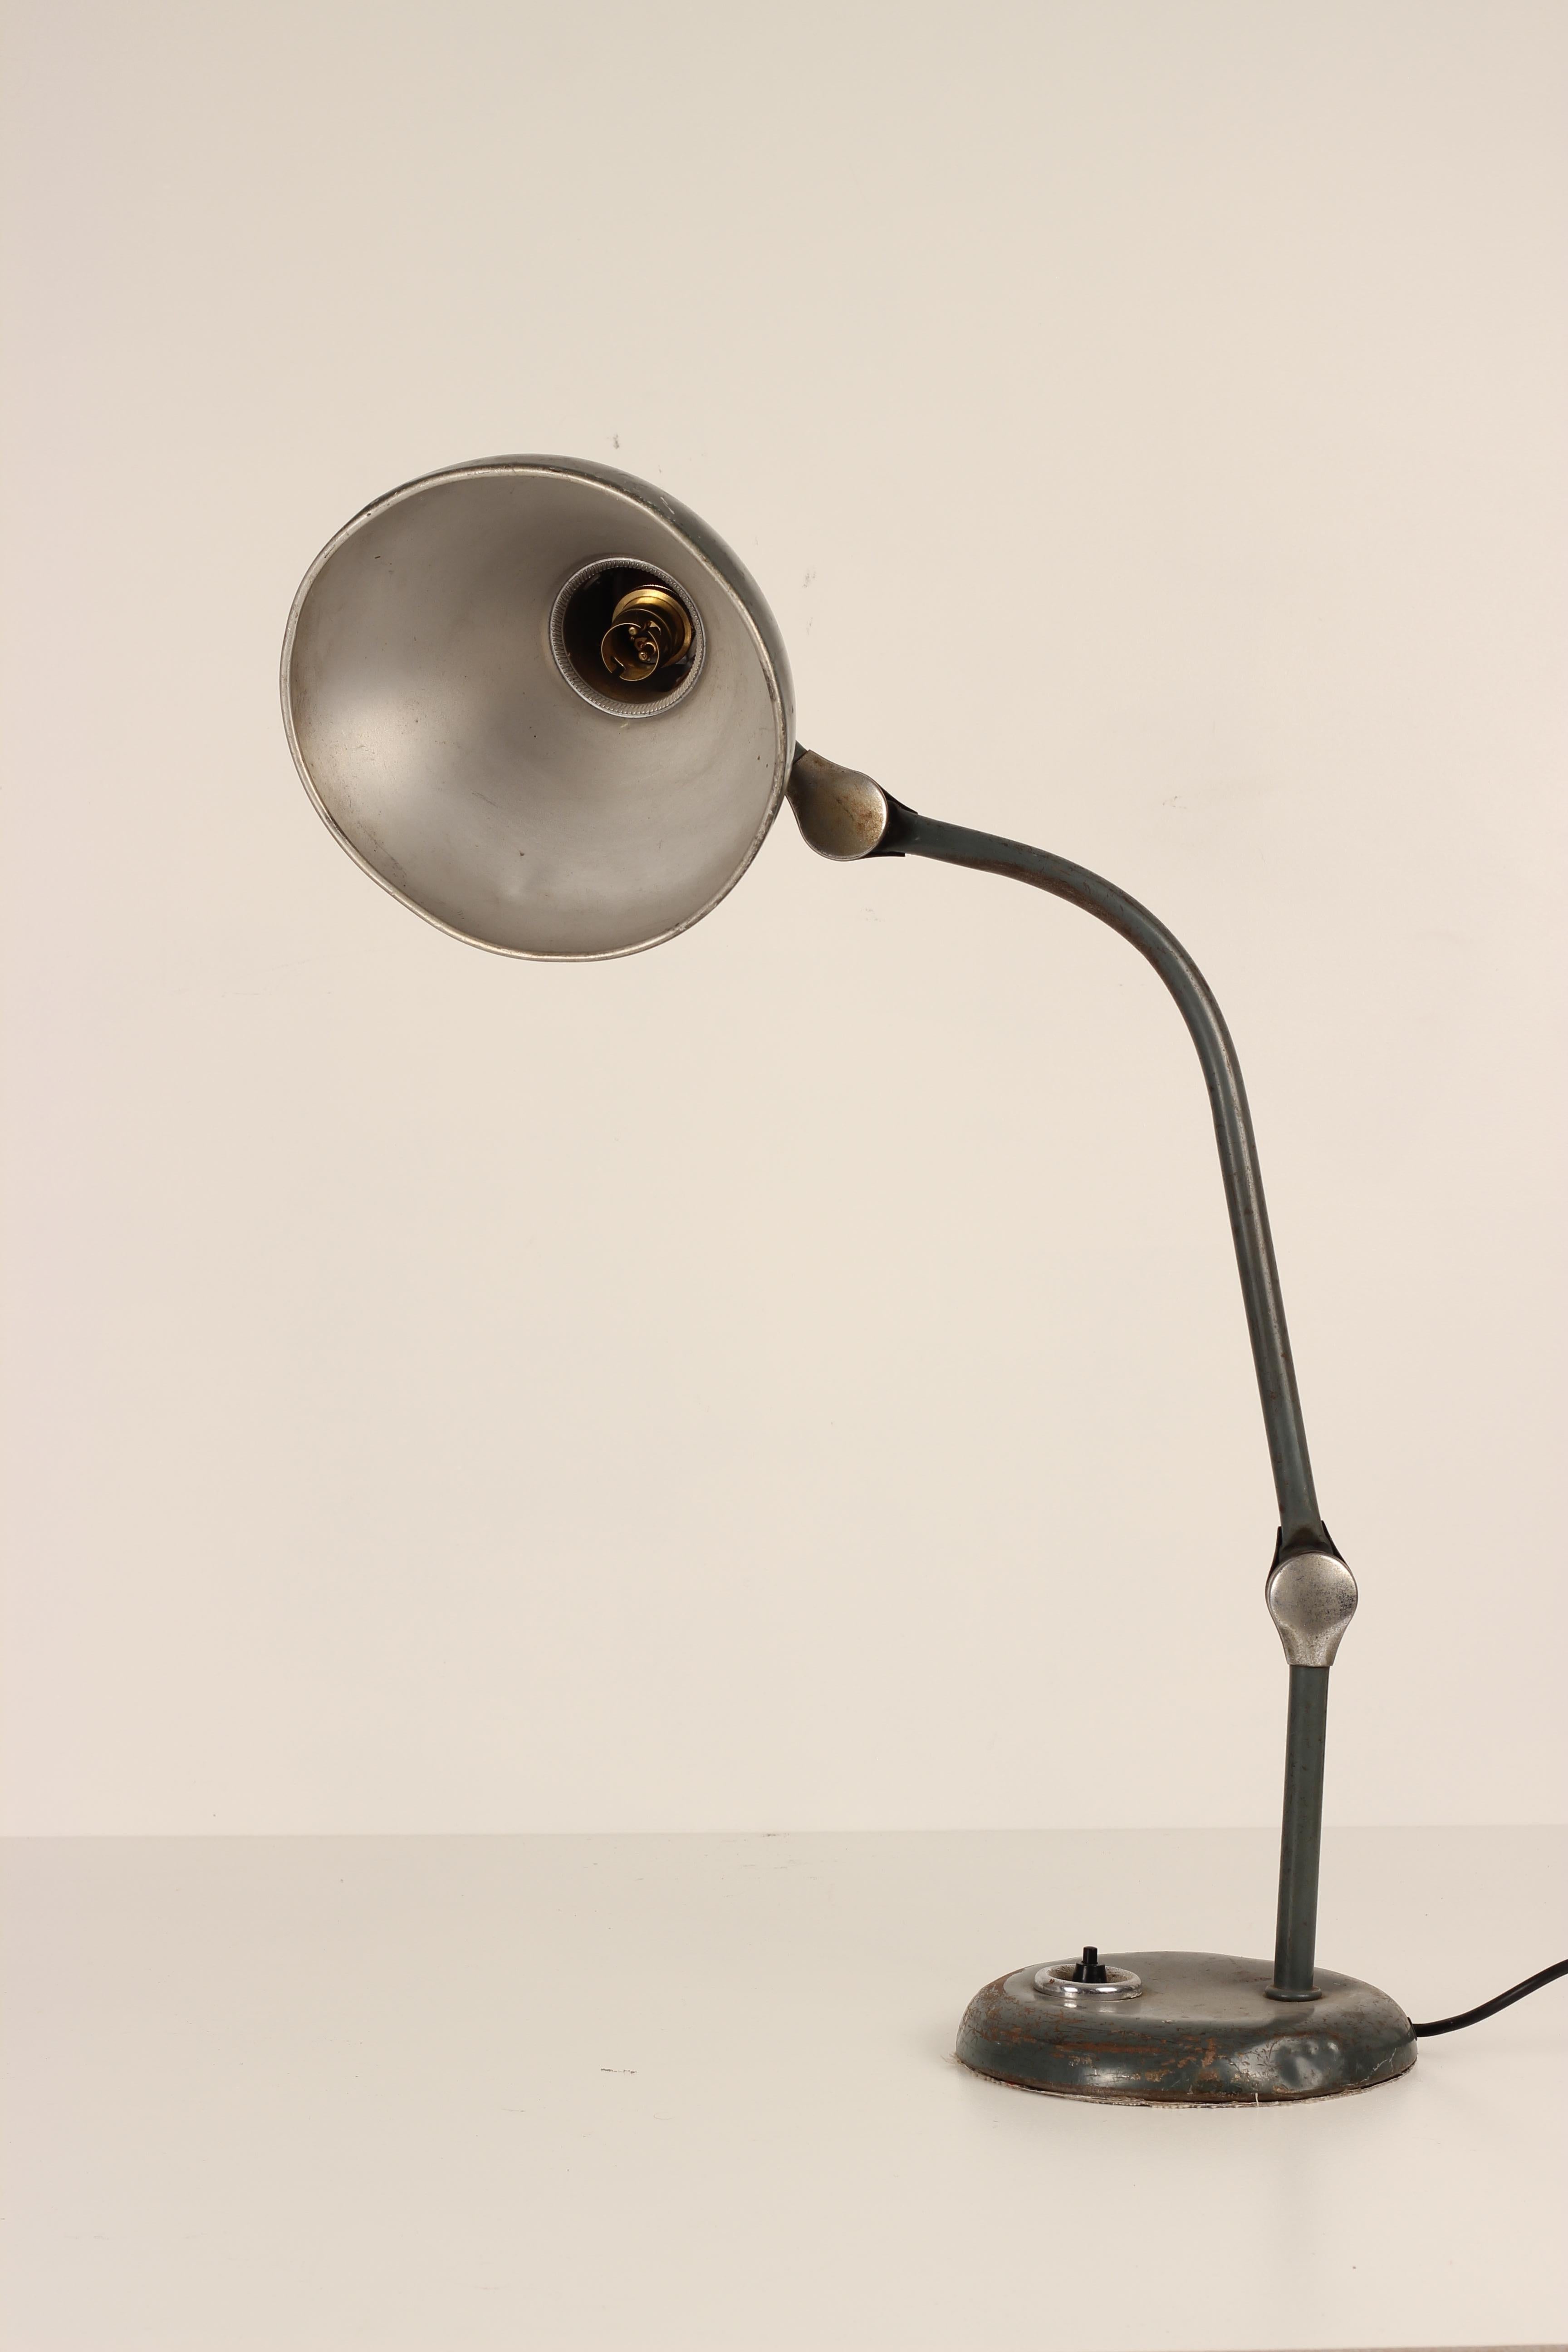 Italian Mid-Century Modern Industrial Fully Adjustable Table or Desk Lamp